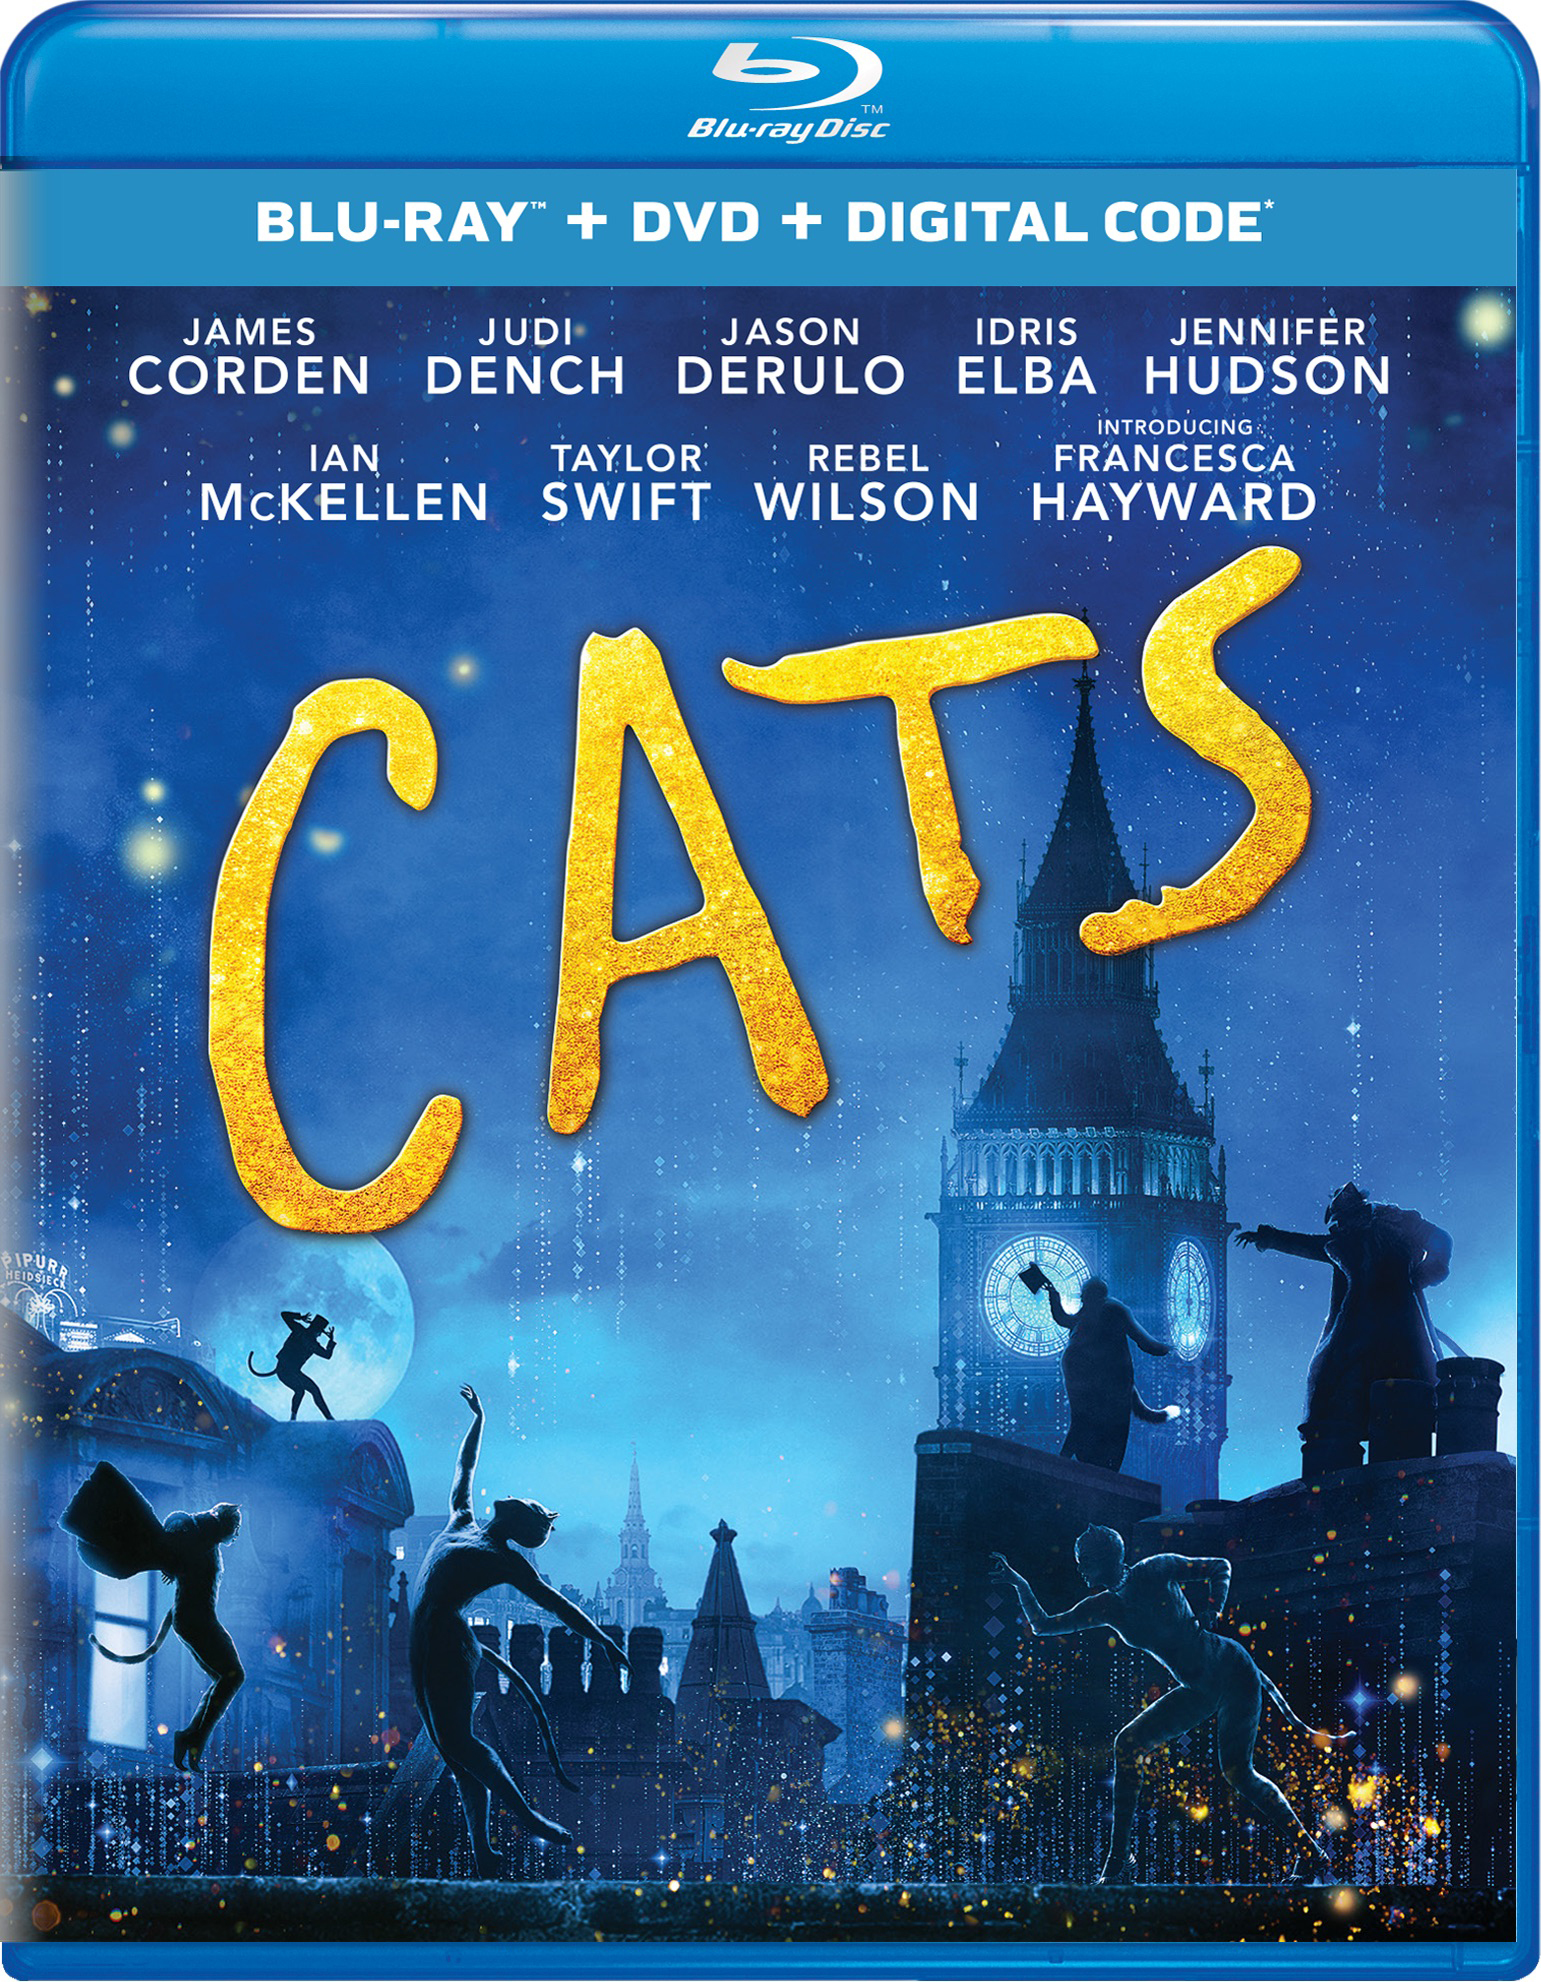 Cats (DVD + Digital) - Blu-ray [ 2019 ]  - Musical Movies On Blu-ray - Movies On GRUV